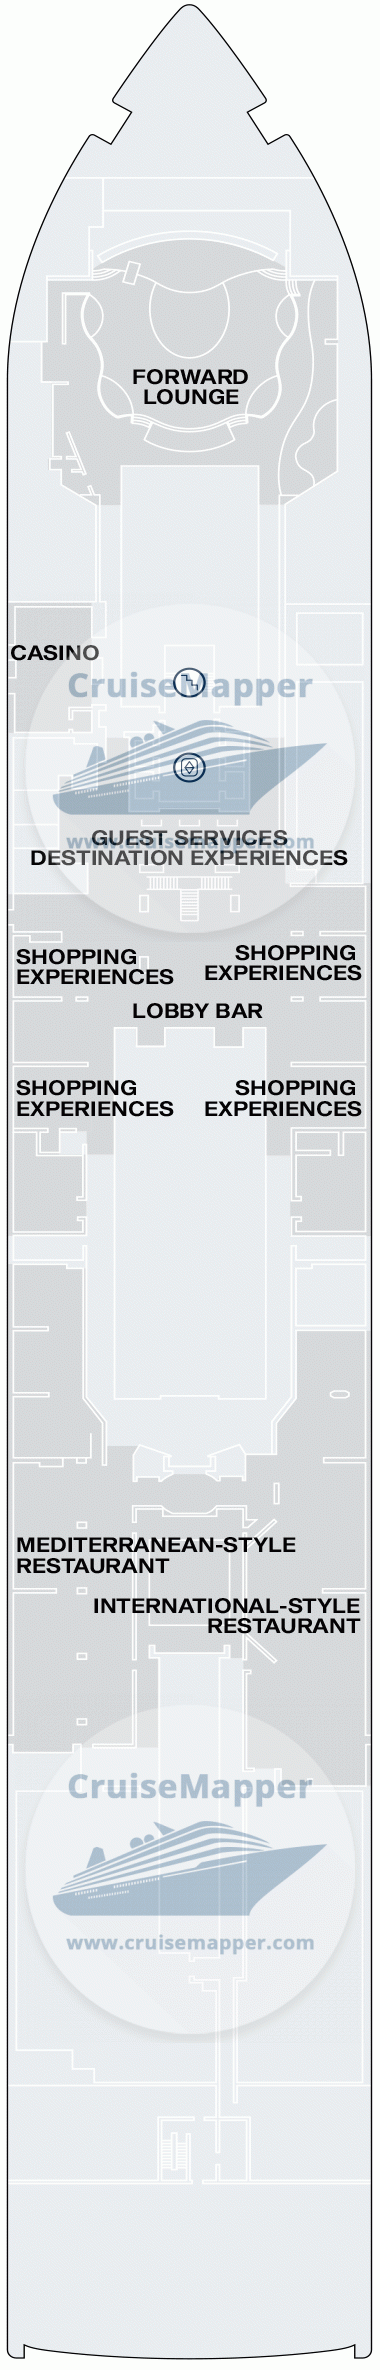 MSC Explora 6 Deck 04 - Lobby-Shops-Casino-Restaurants